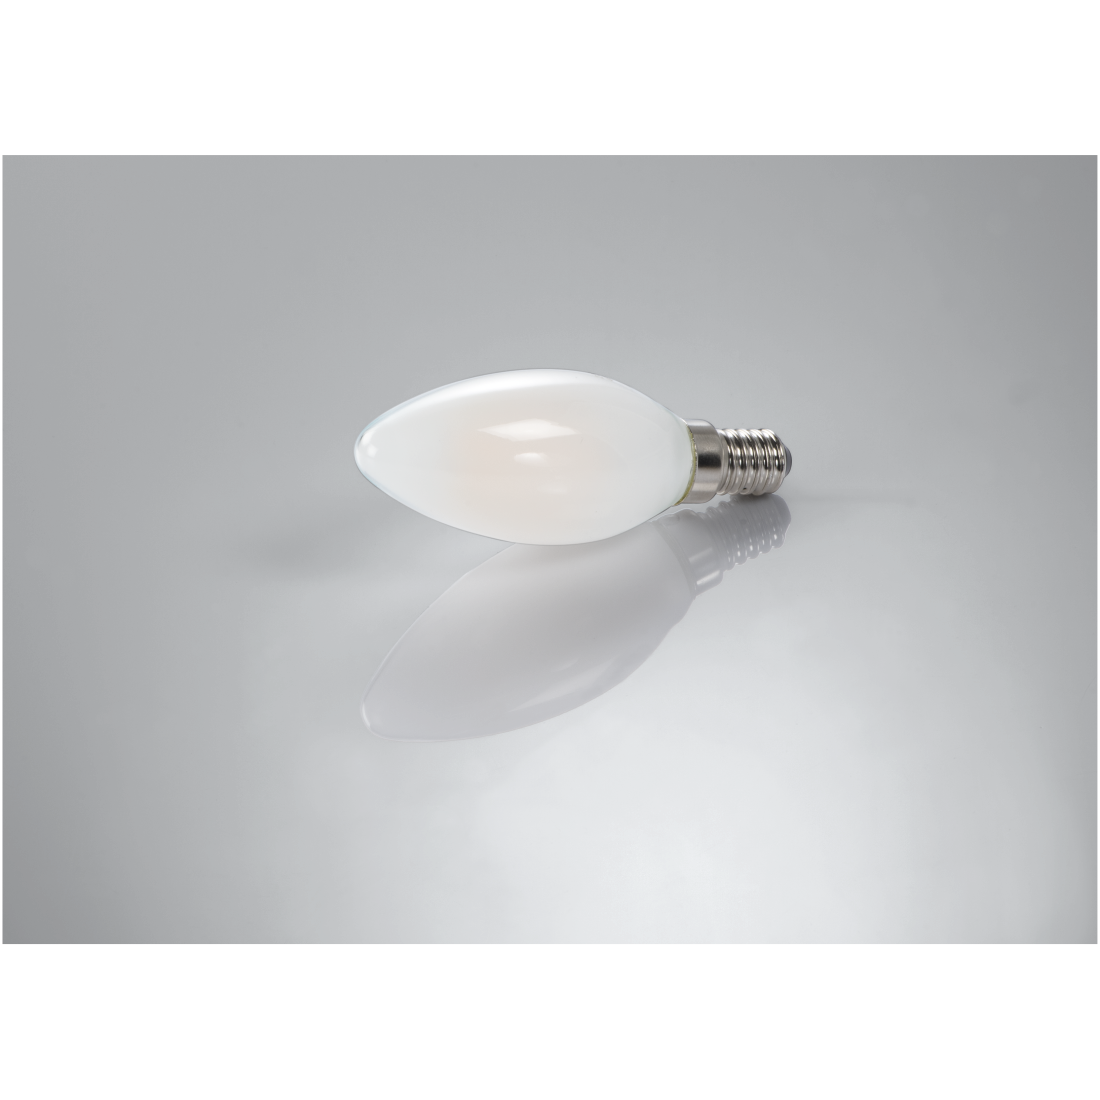 abx3 High-Res Image 3 - Xavax, LED Filament, E14, 250 lm Replaces 25 W, Candle Bulb, matt, warm white